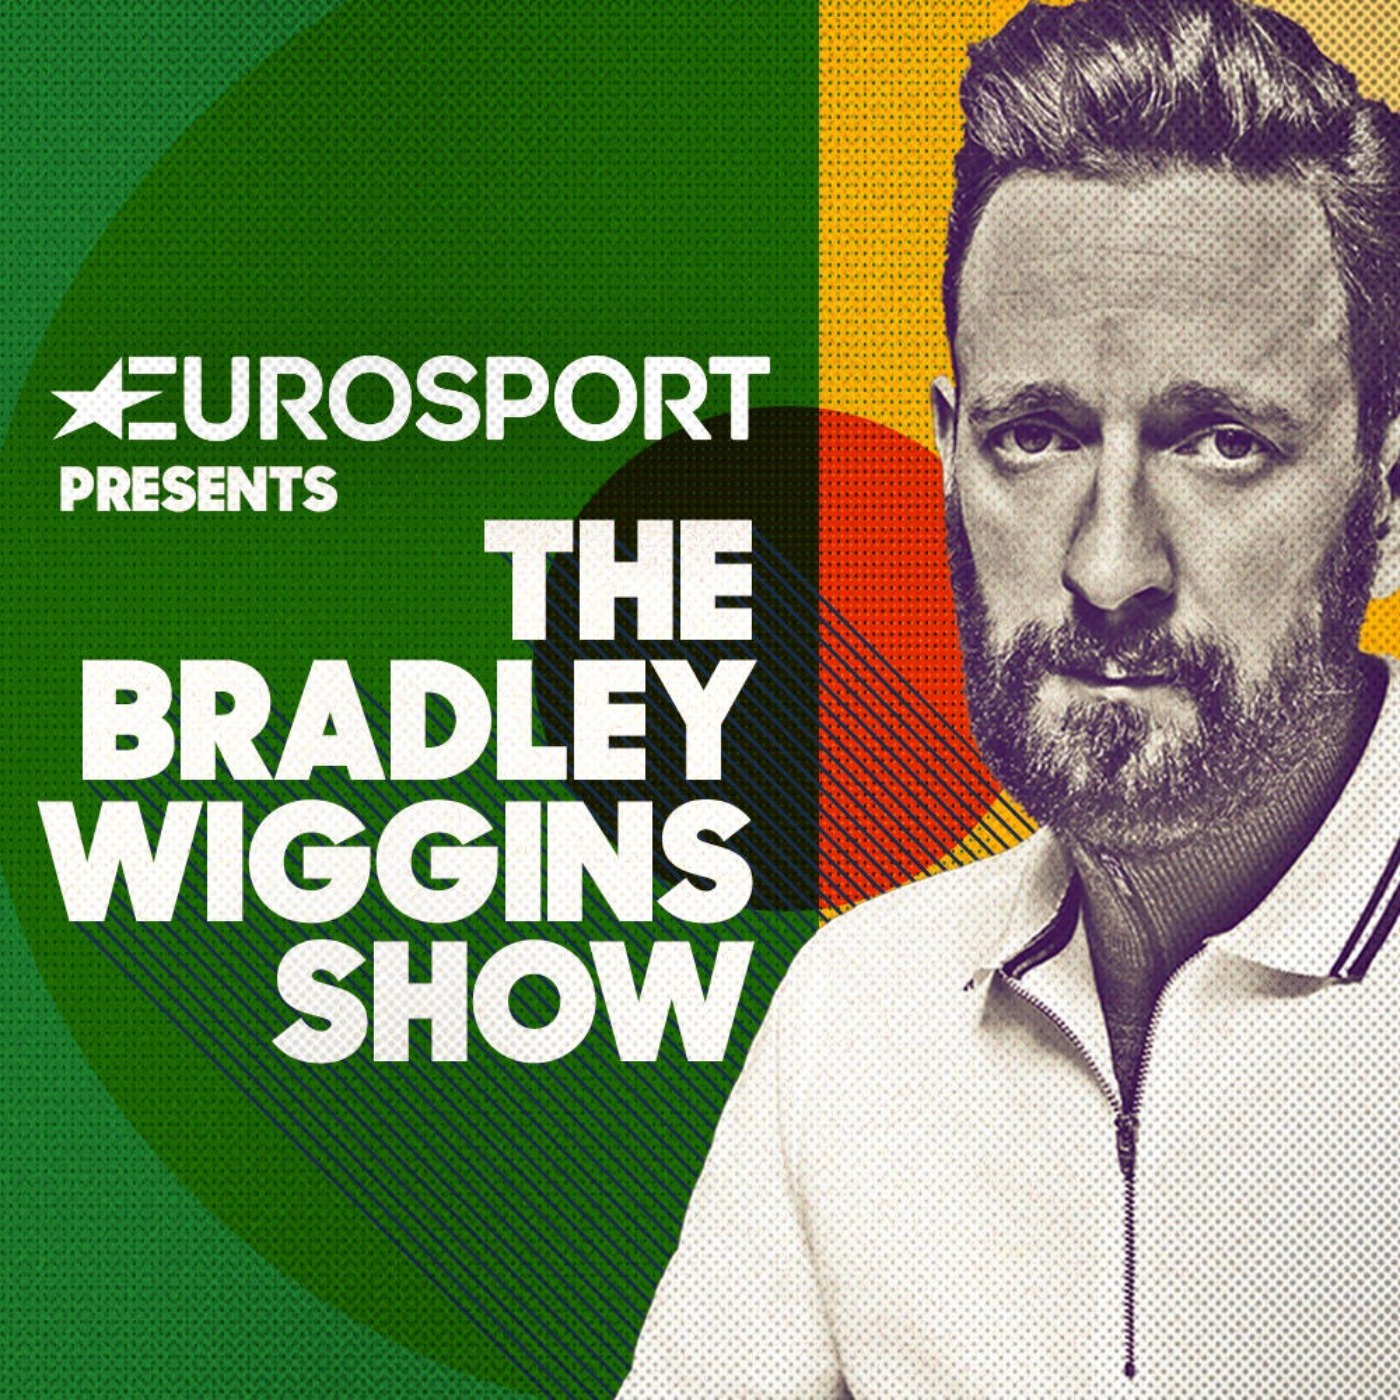 Coming soon - The Bradley Wiggins Show